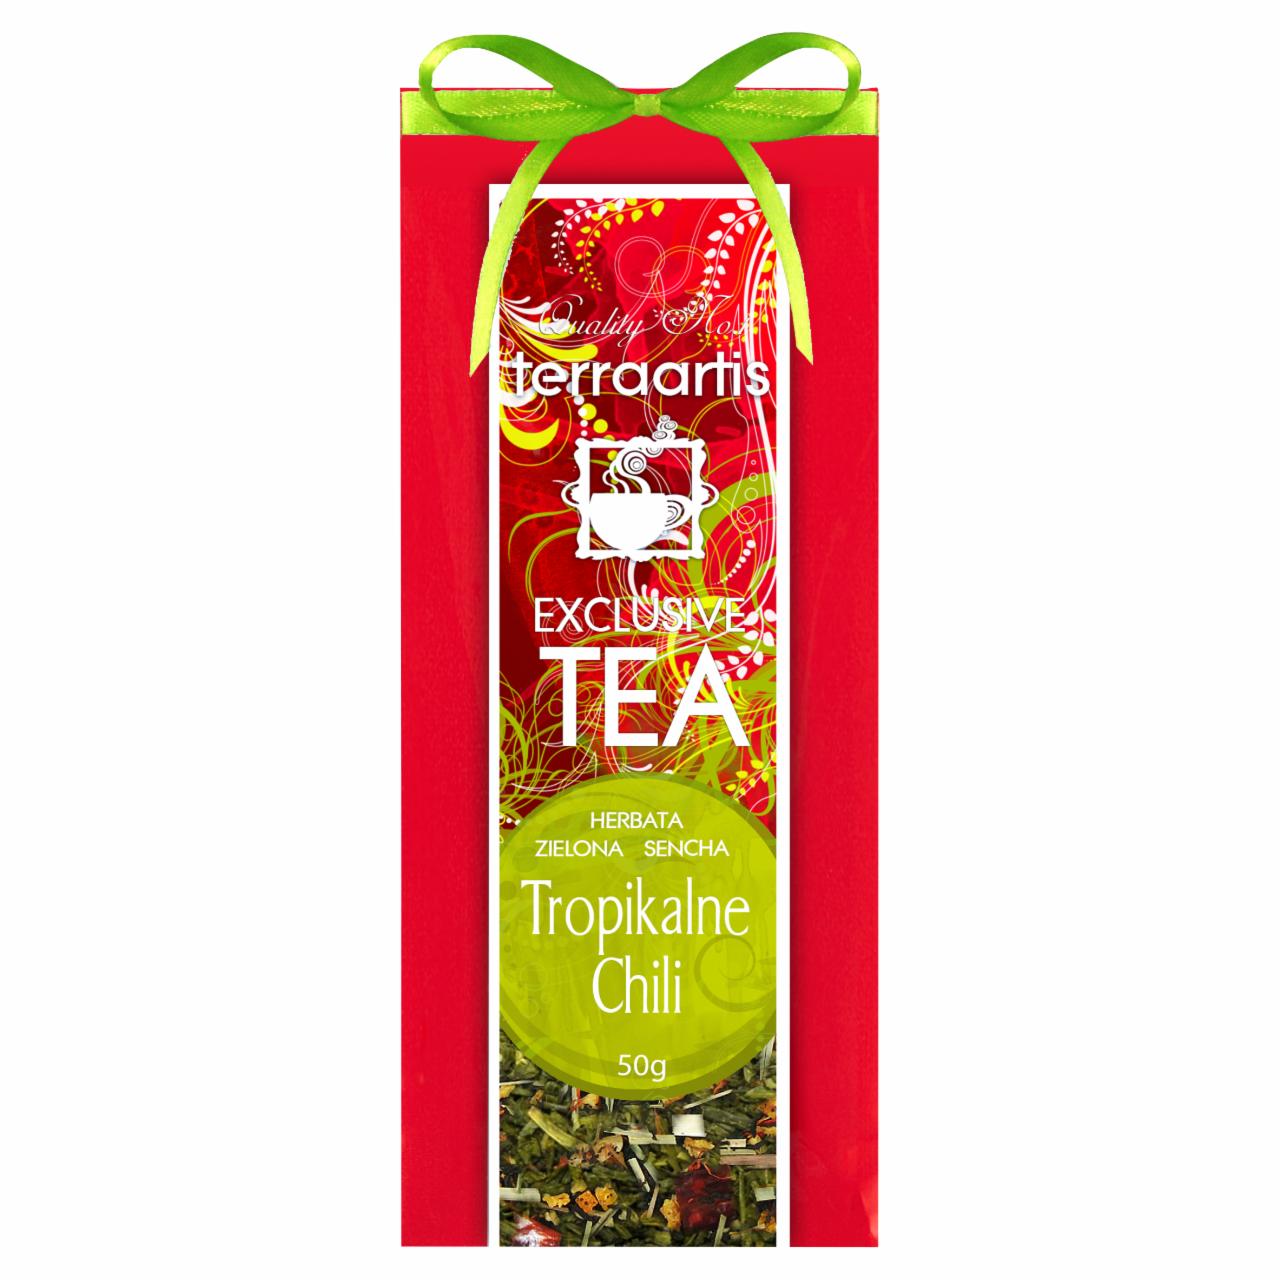 Zdjęcia - Terraartis Exclusive Tea Herbata zielona Sencha tropikalne chili 50 g